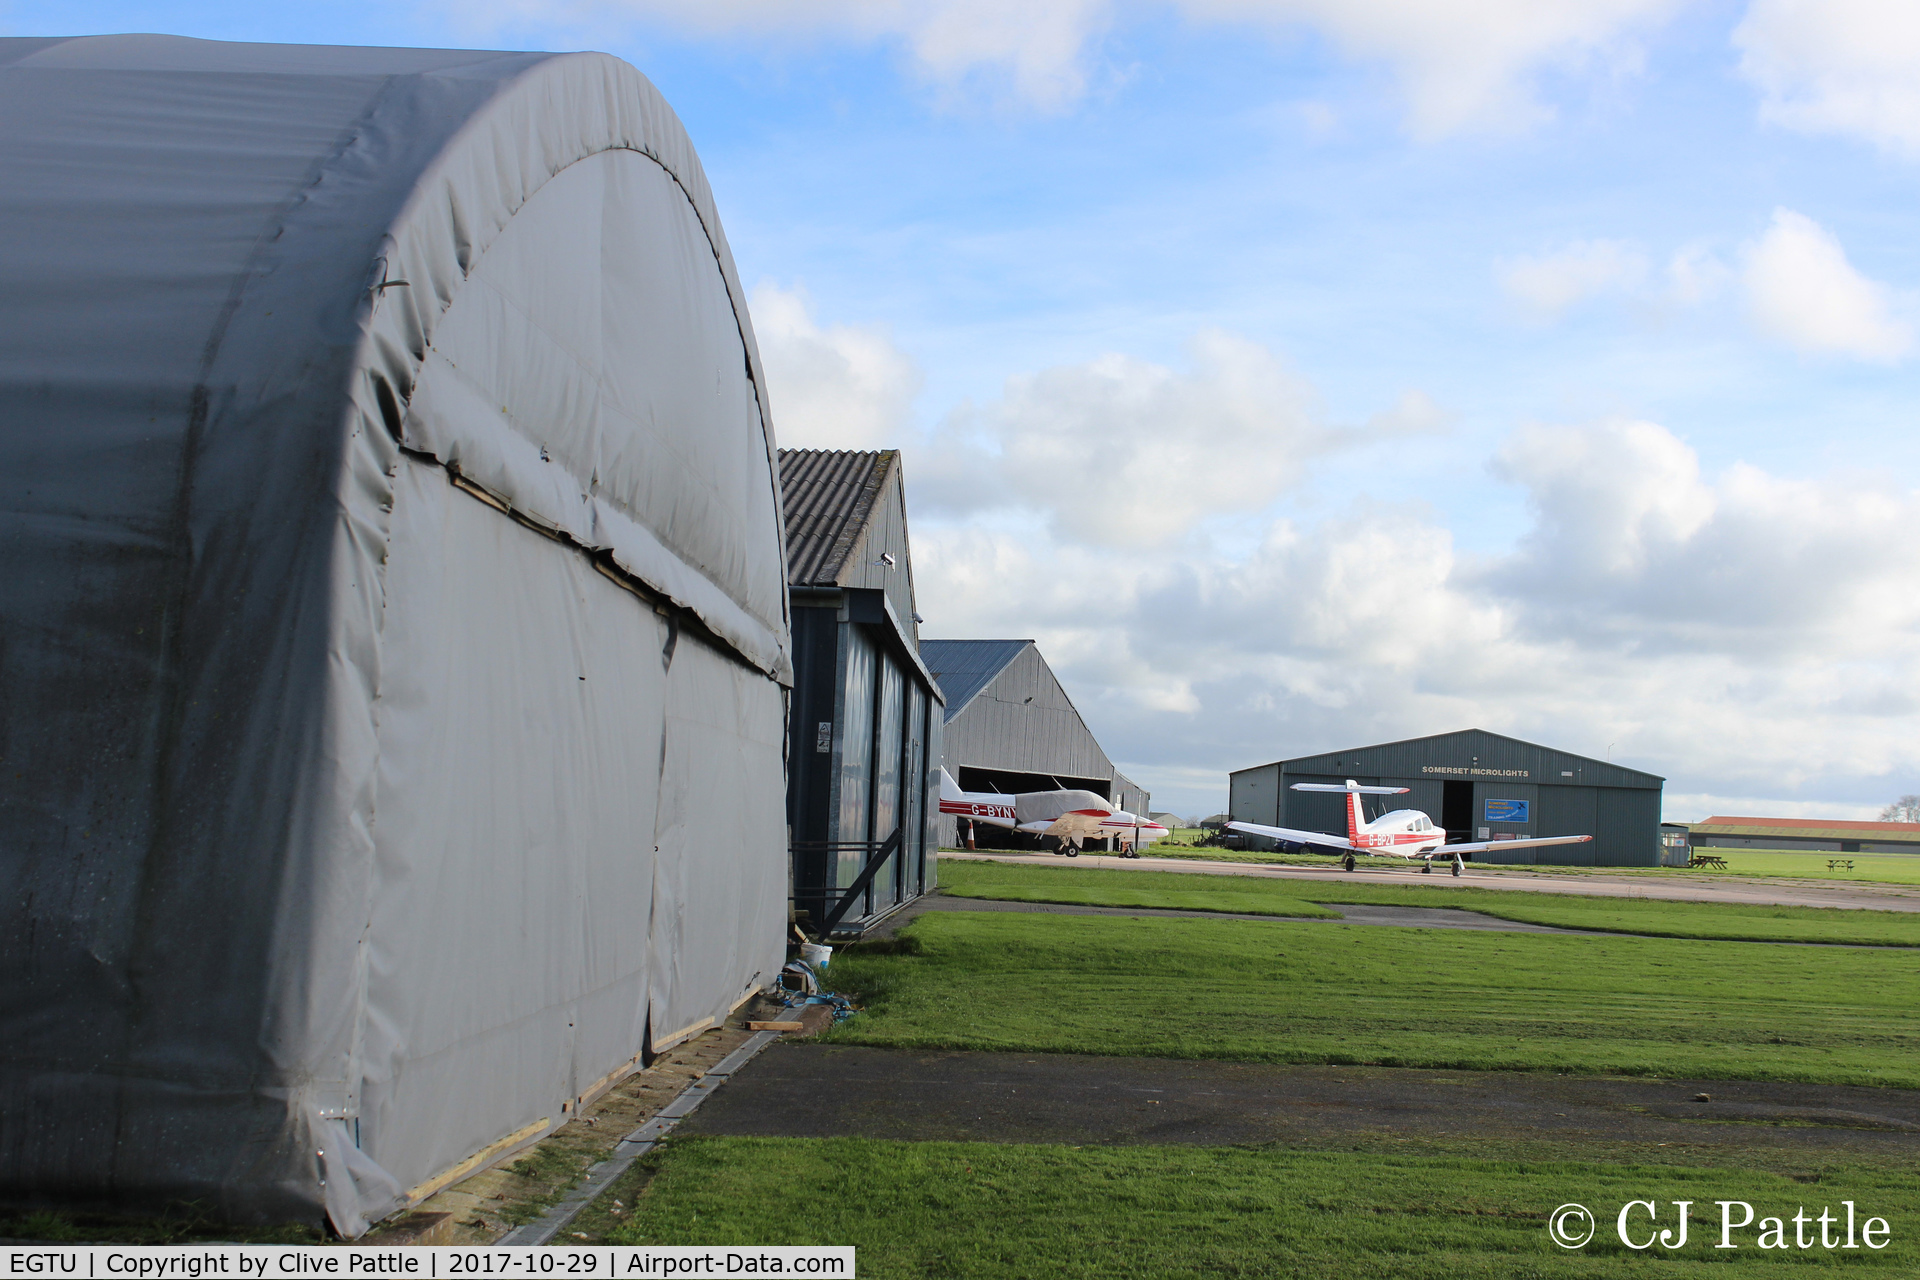 Dunkeswell Aerodrome Airport, Honiton, England United Kingdom (EGTU) - Hangar view at Dunkeswell